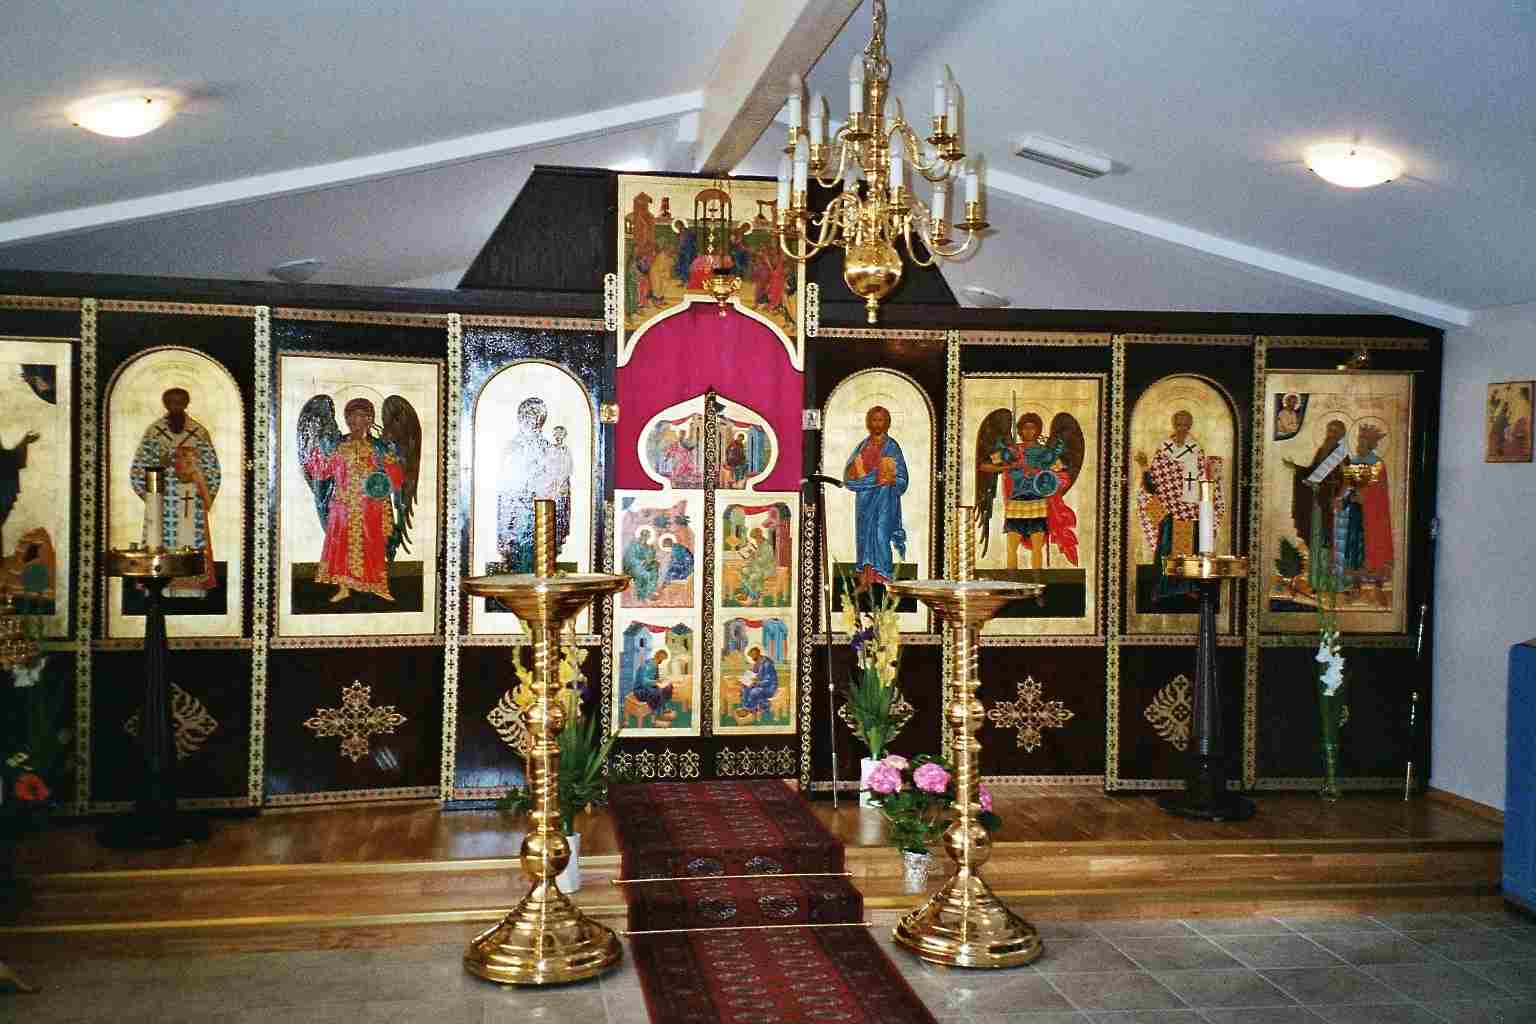 The iconostasis og Hl. Nikolai Orthodox Church in Oslo